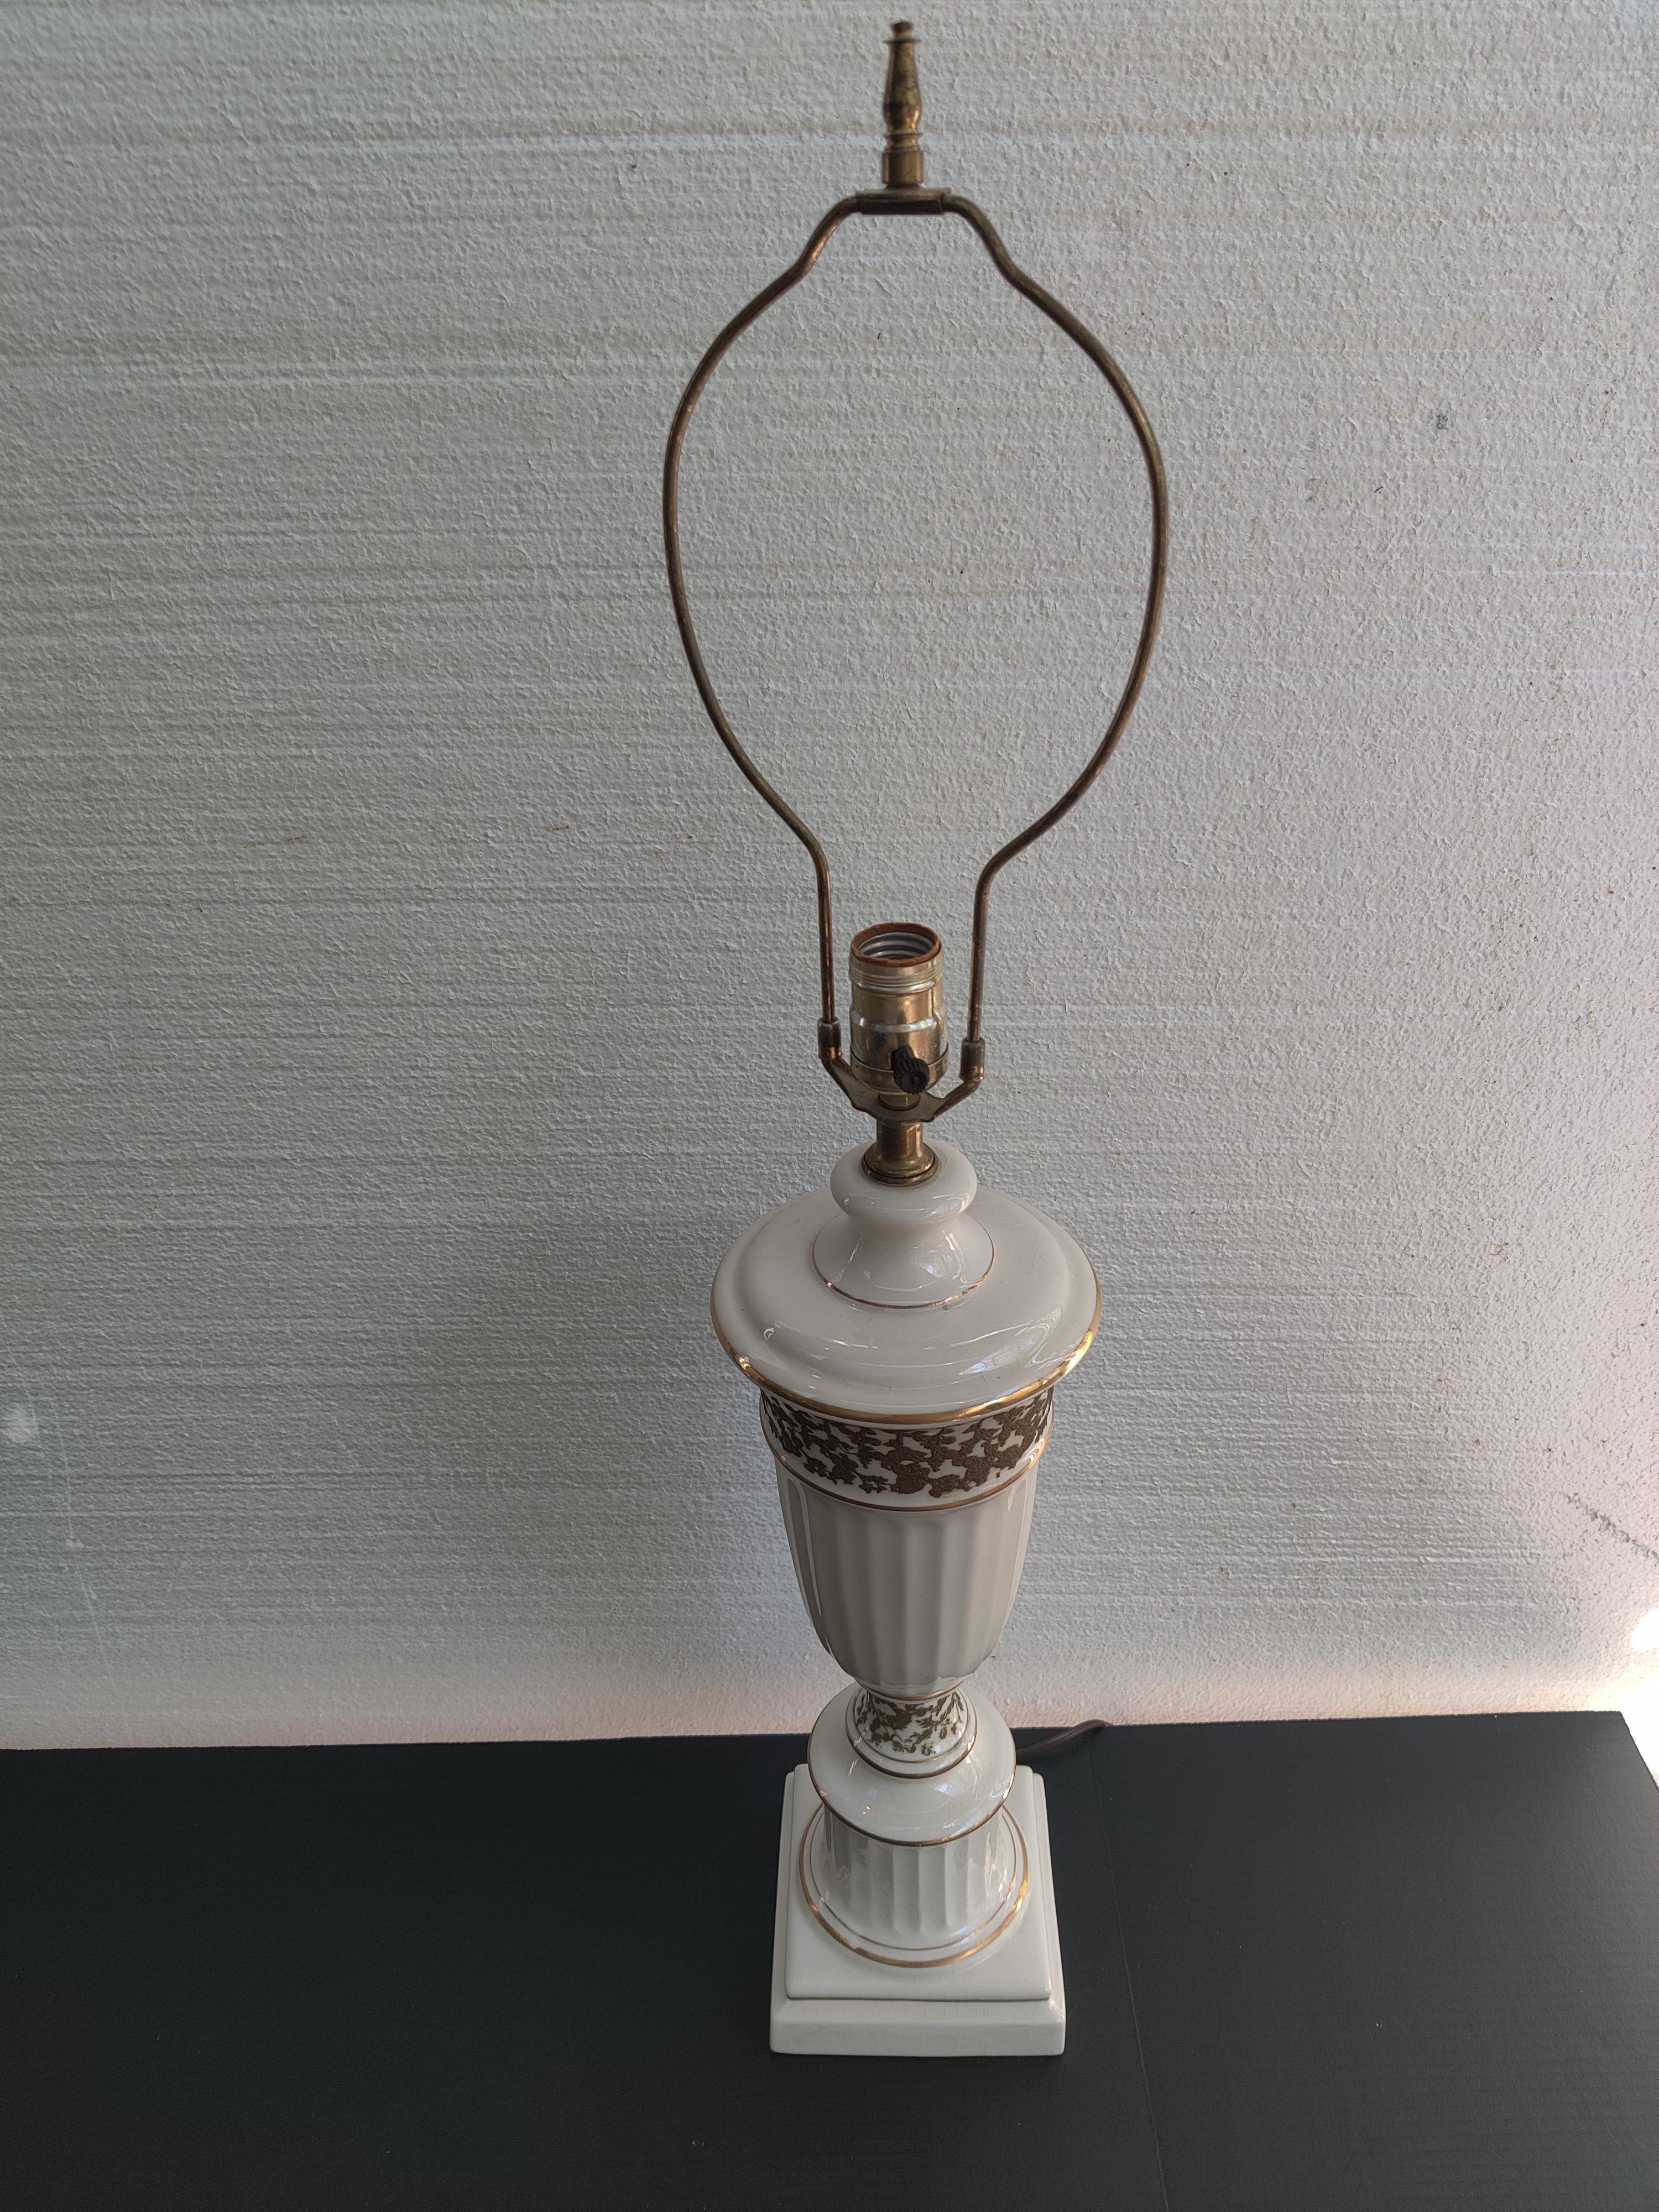 American Hollywood Regency Gold Gilt Embossed Trim Ceramic Lamp For Sale